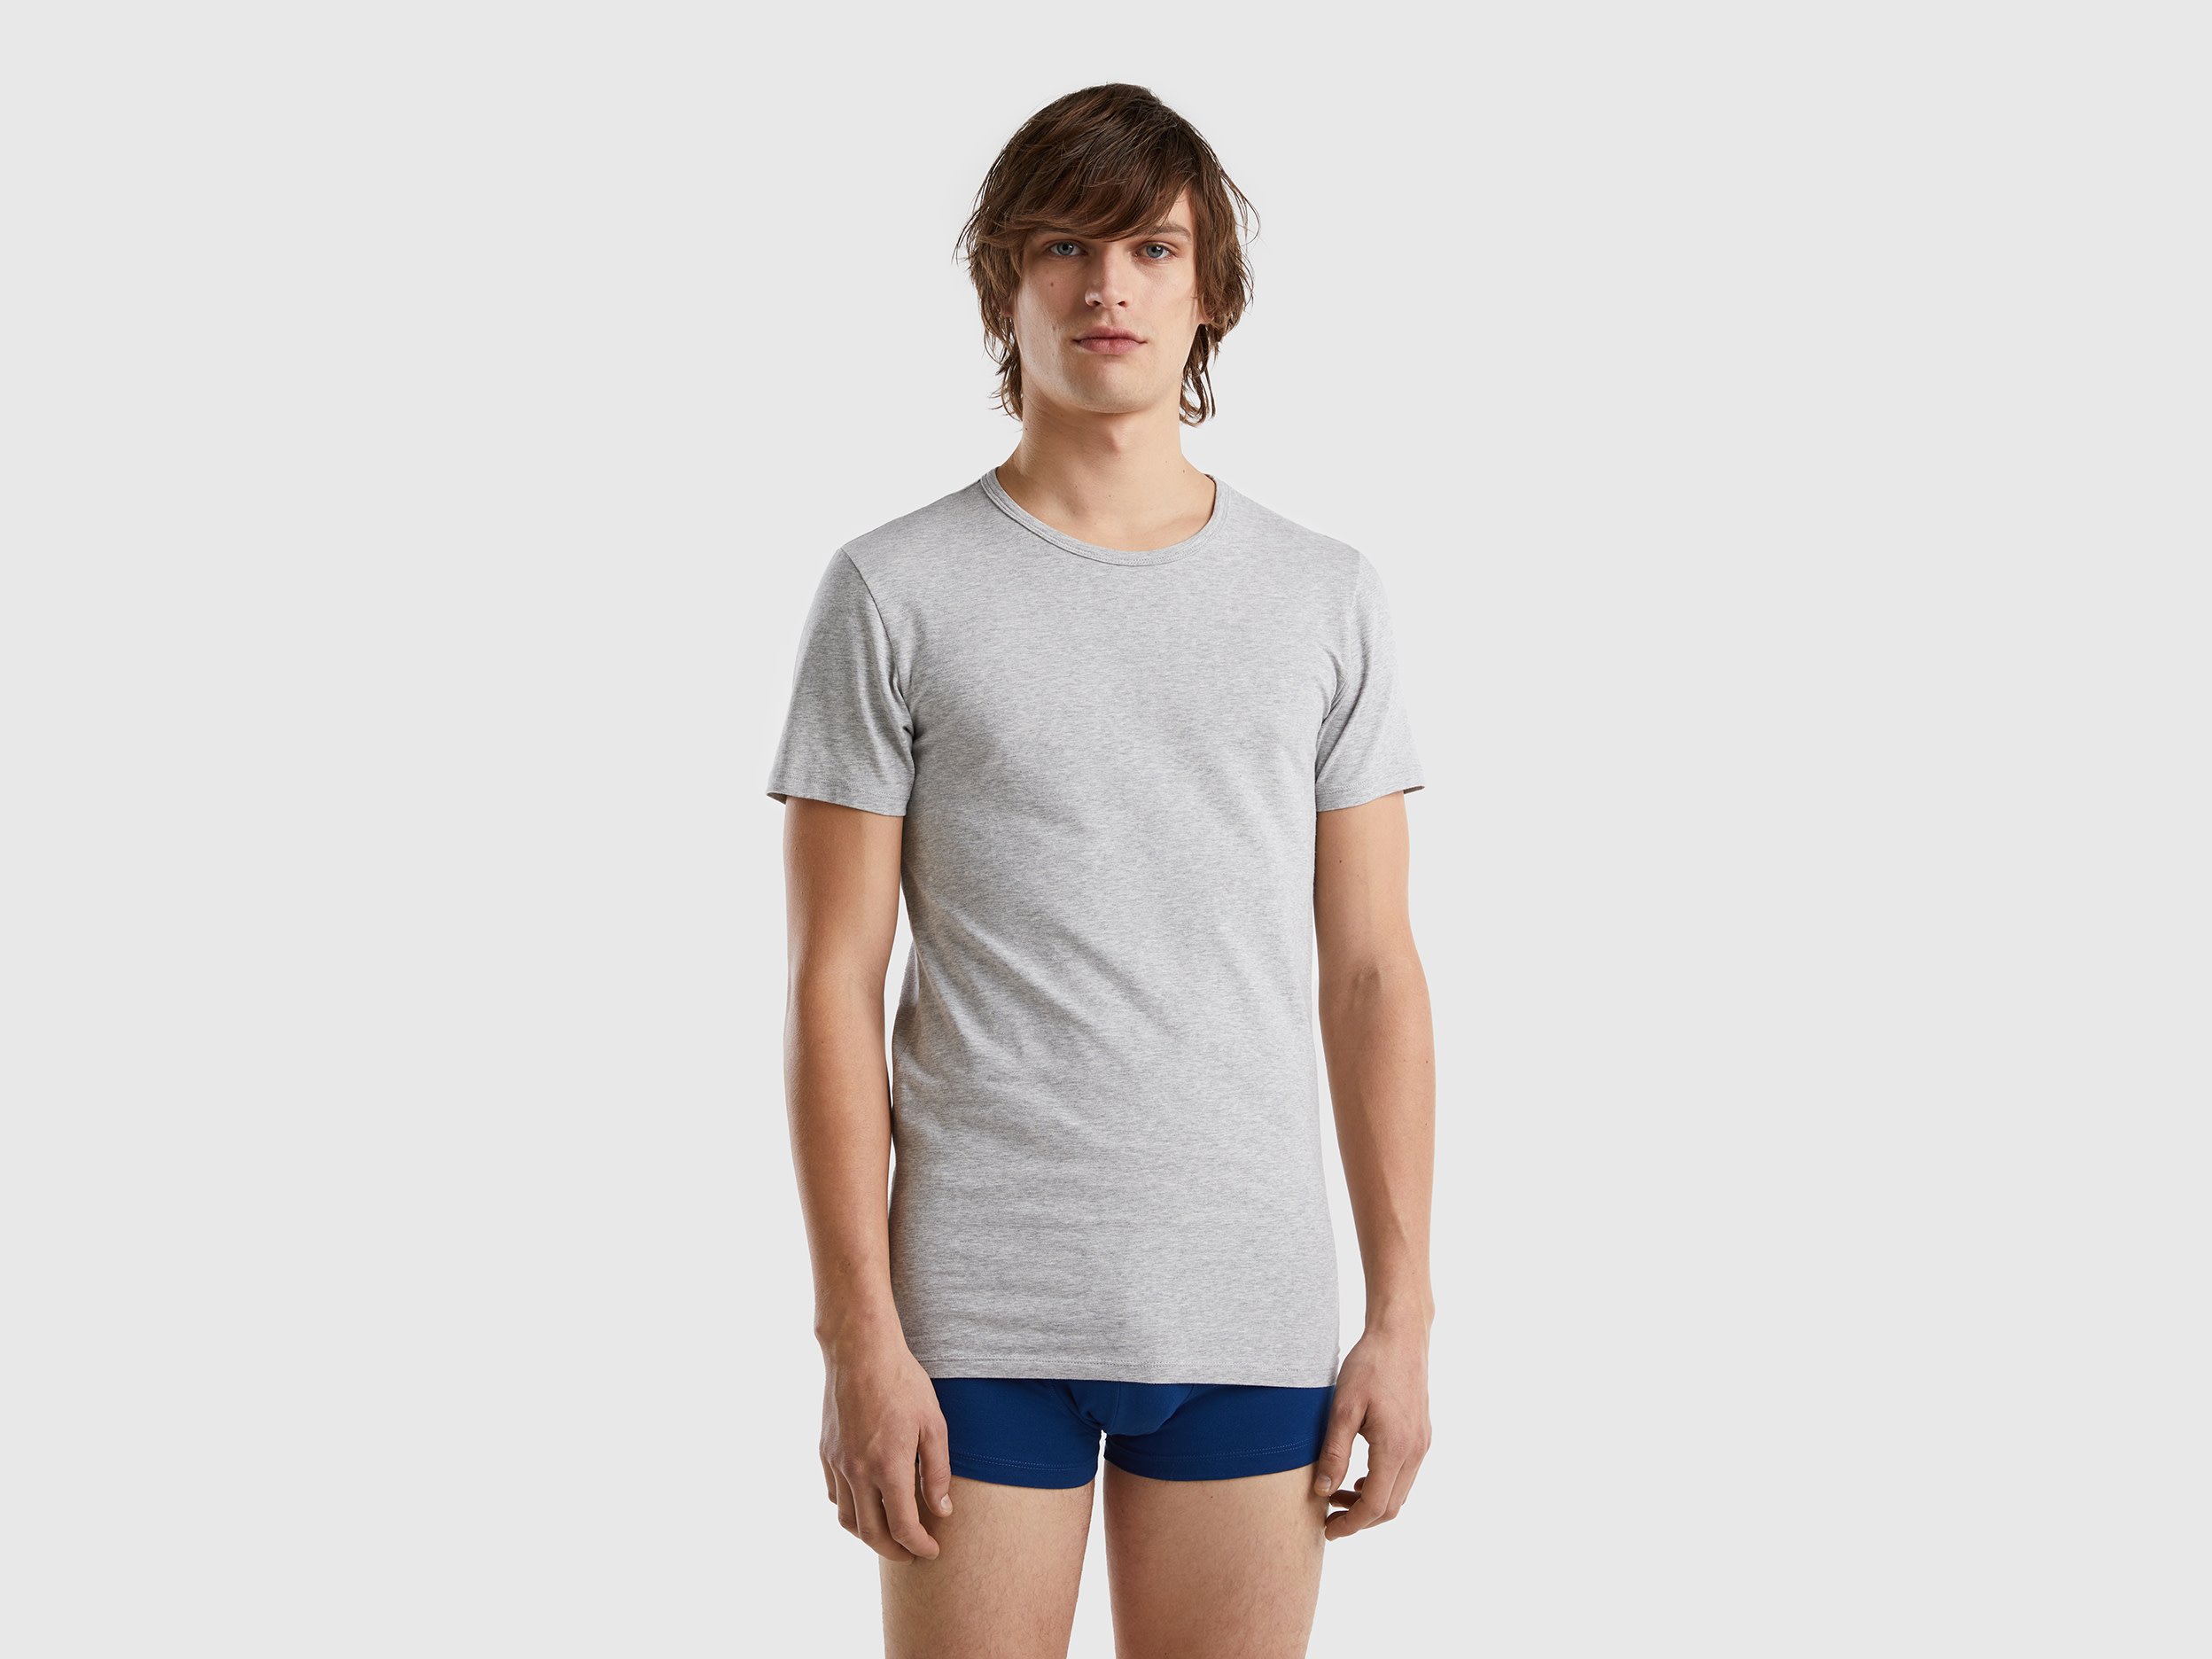 Image of Benetton, Organic Stretch Cotton T-shirt, size XXL, Light Gray, Men